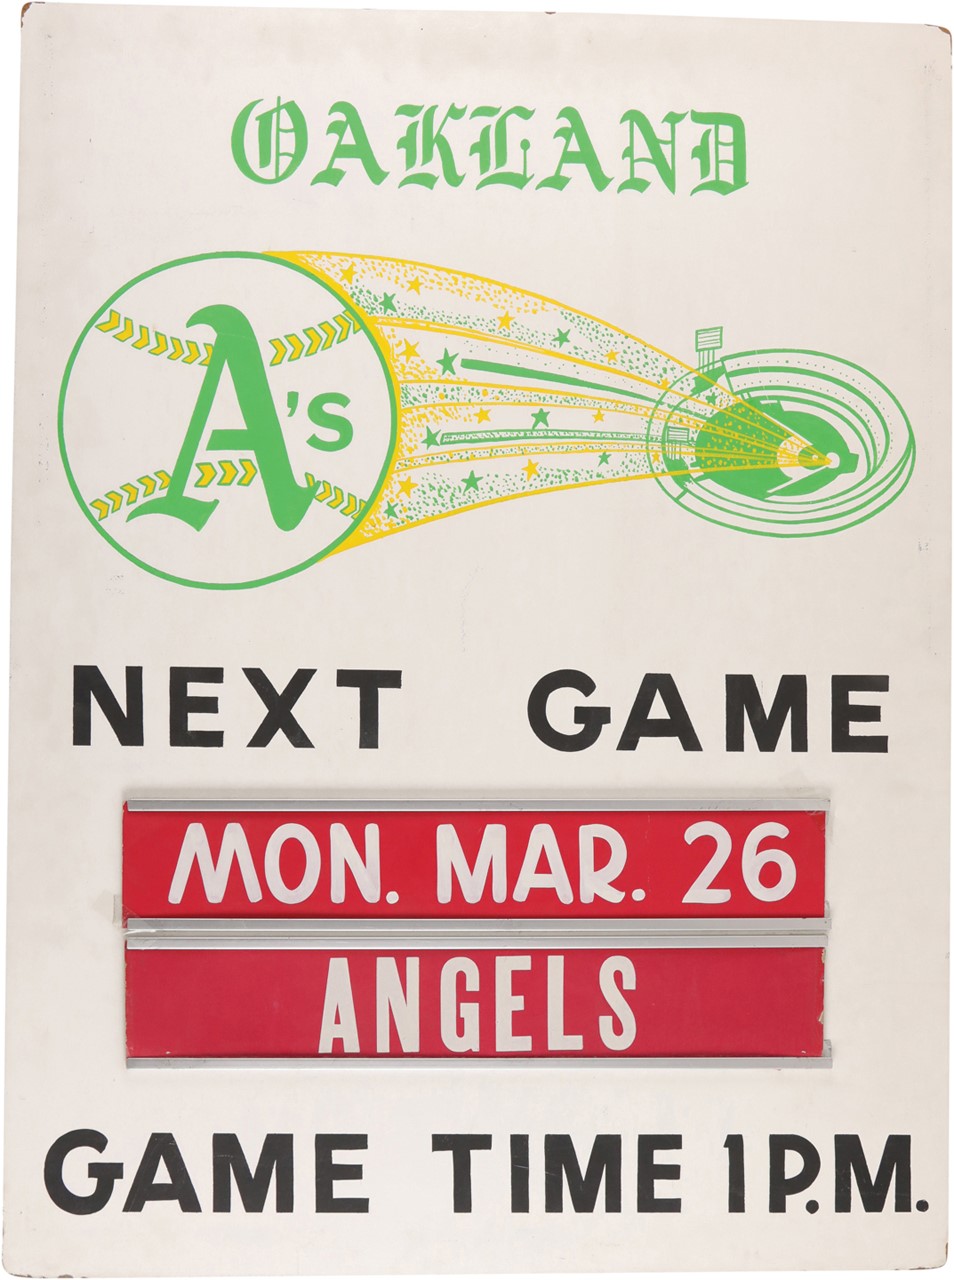 1970s Oakland Athletics "Next Game" Sign